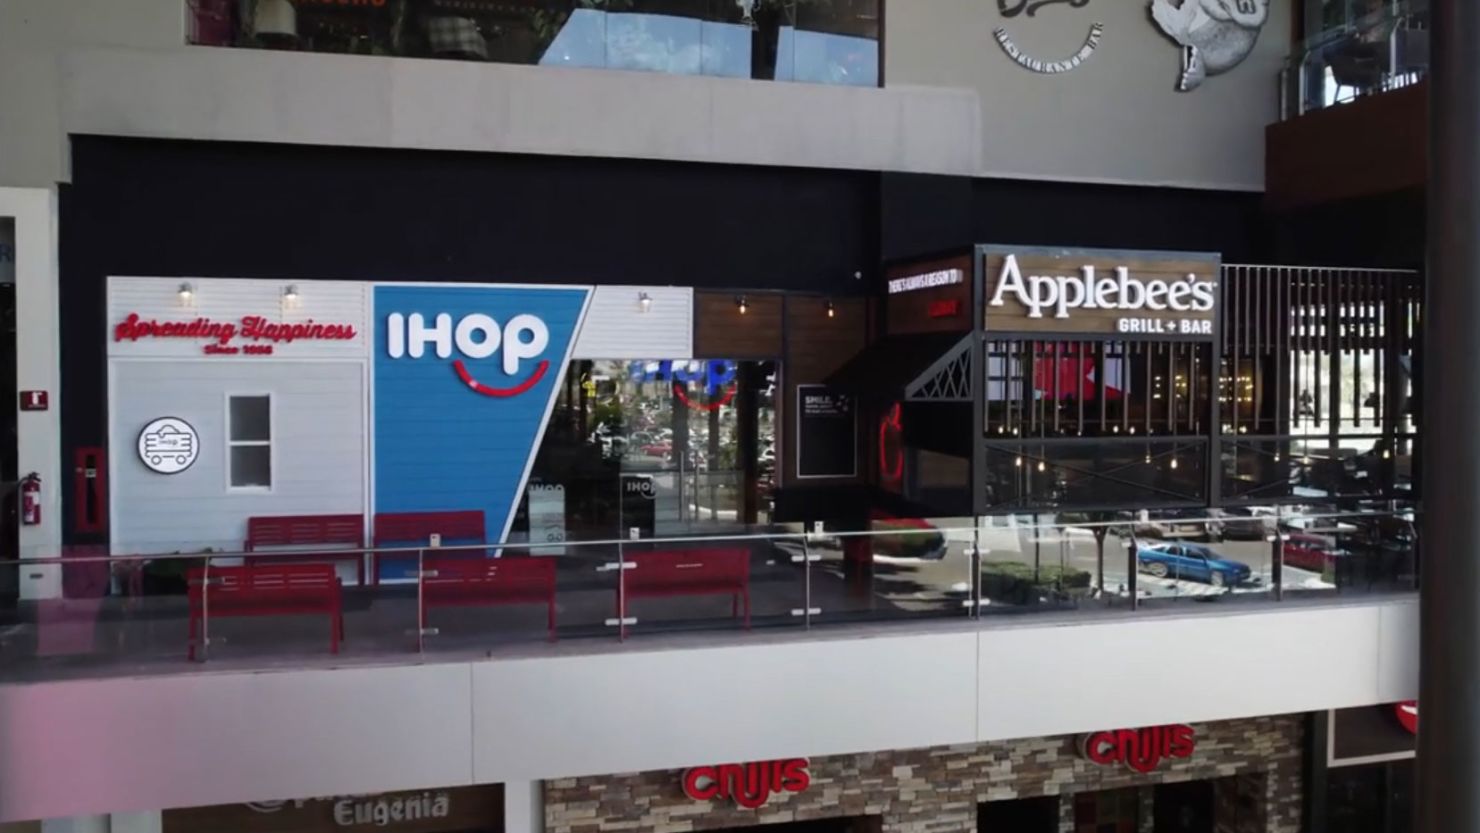 An Applebee’s/IHOP dual-branded restaurant in Leon, Mexico.